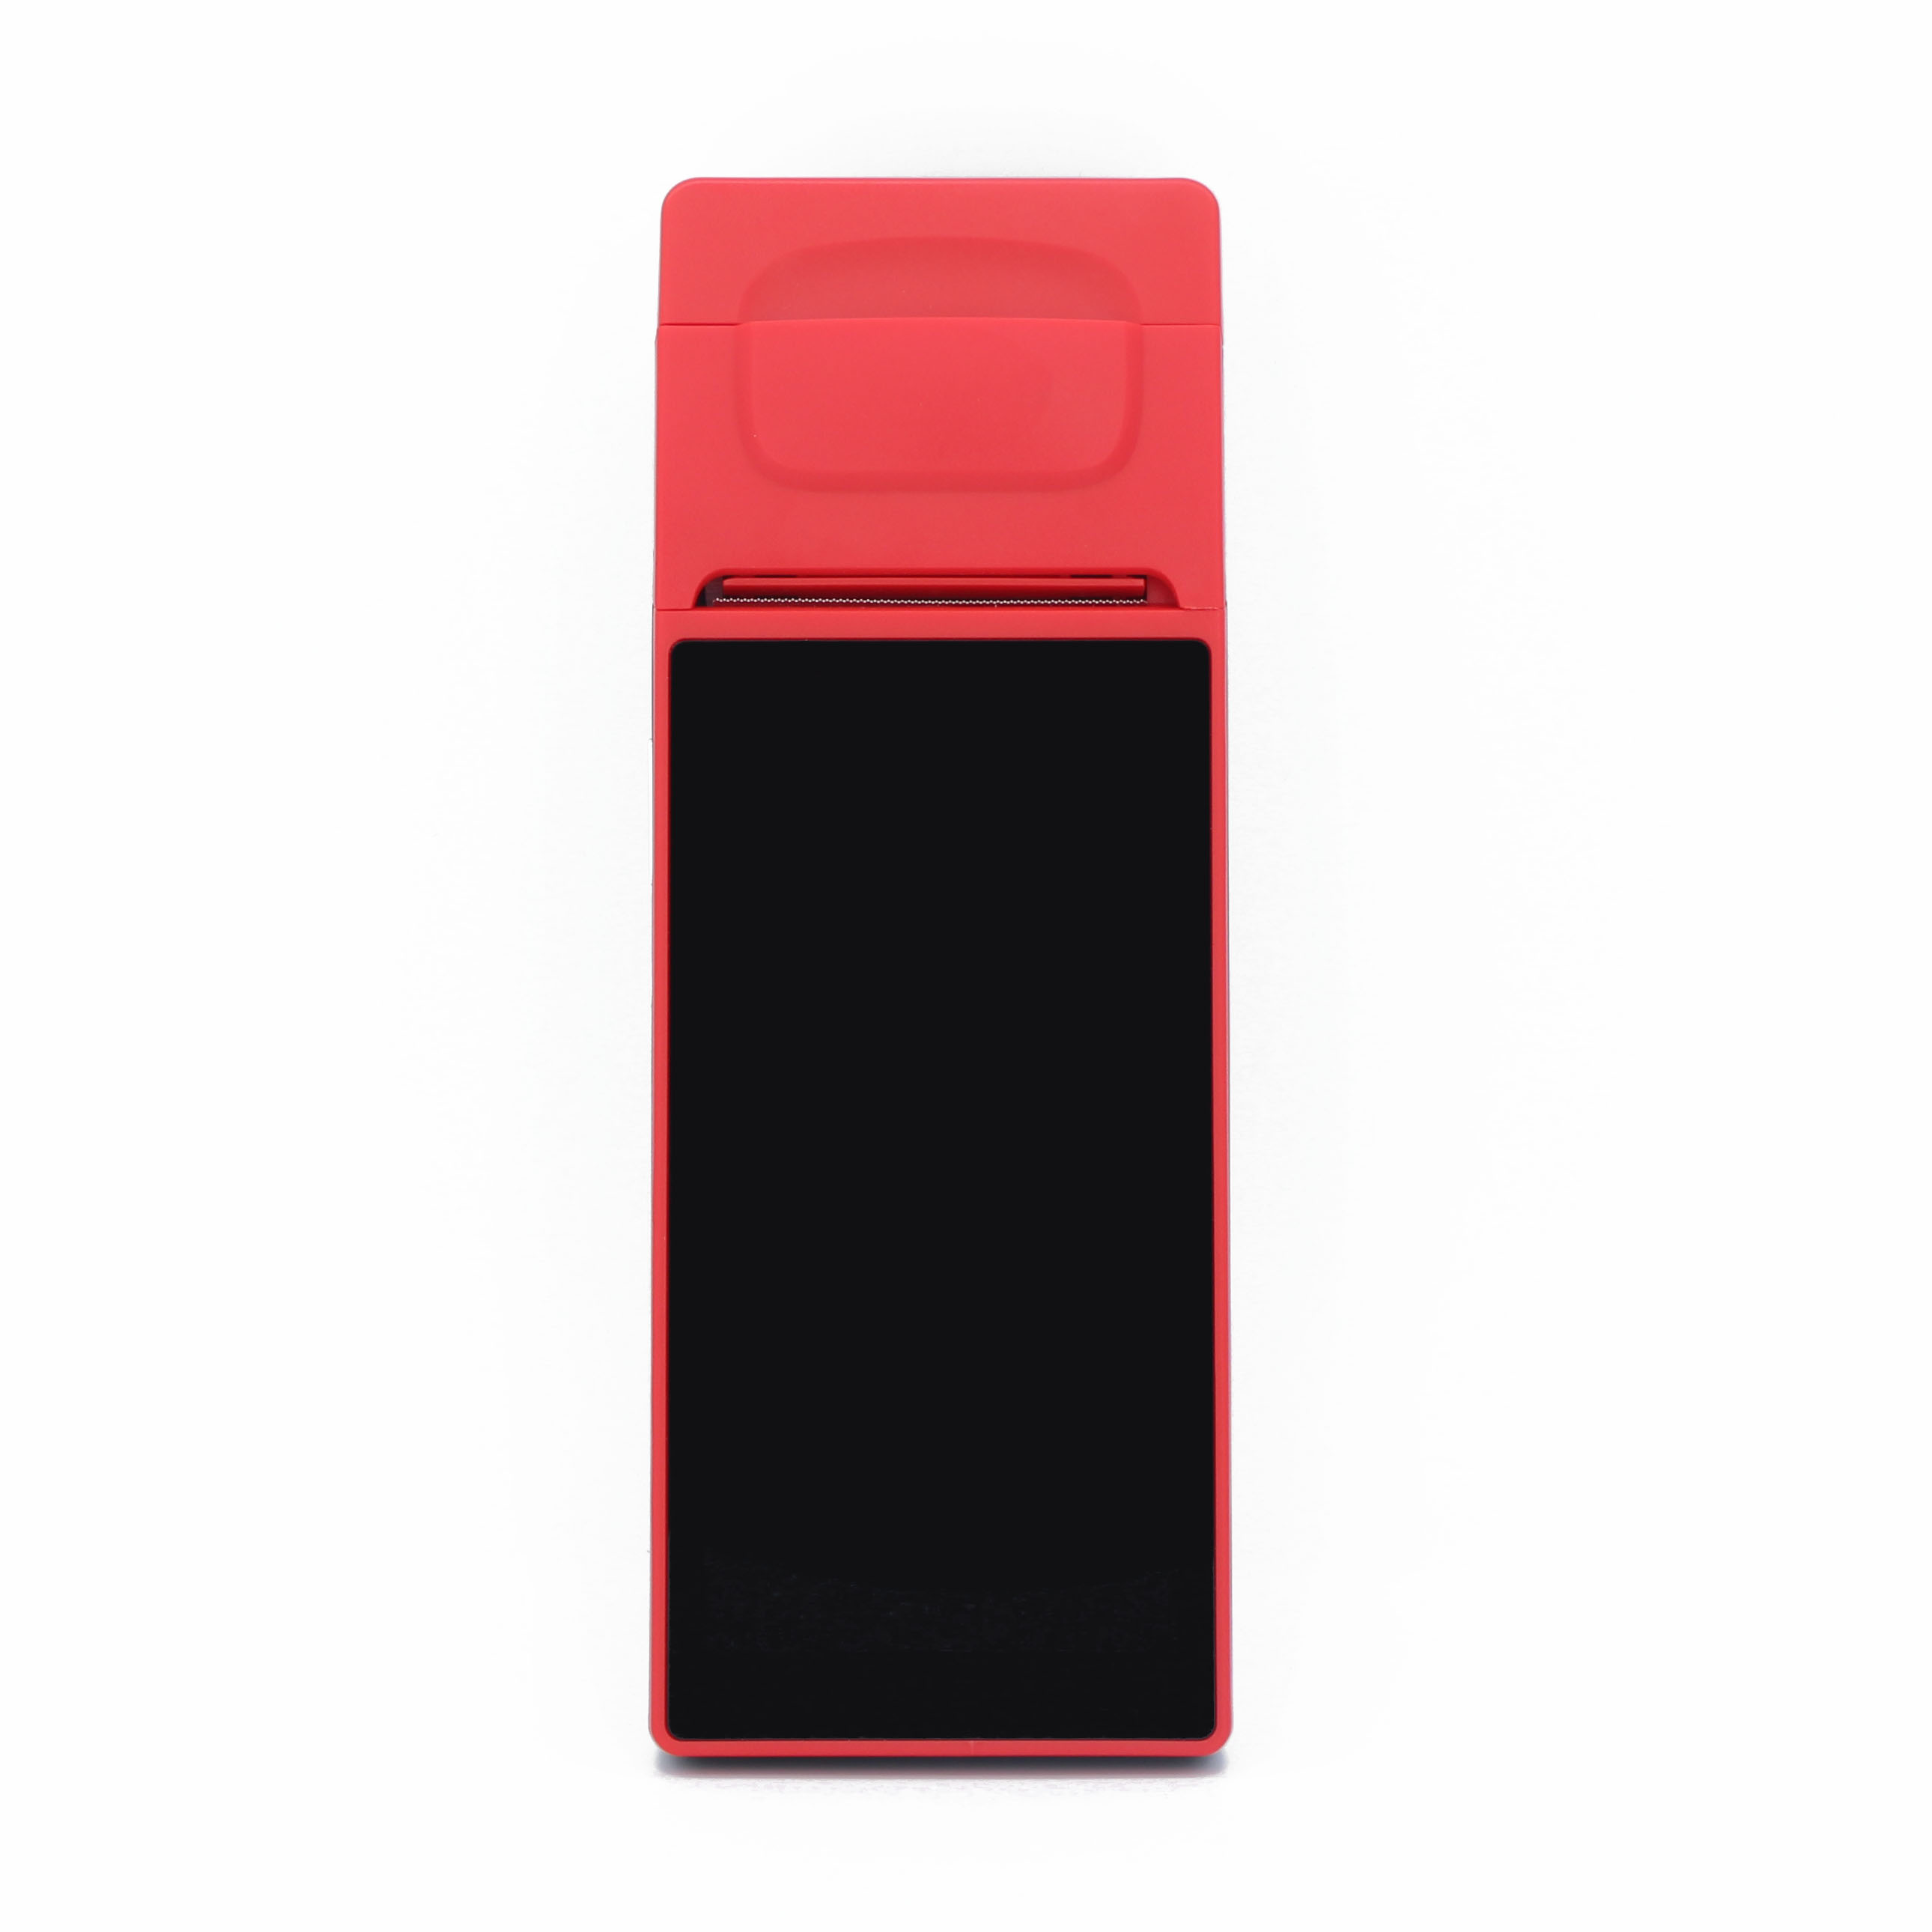 Terminal portátil Android POS con pantalla táctil de 6 pulgadas con impresora para estacionamiento de automóviles
